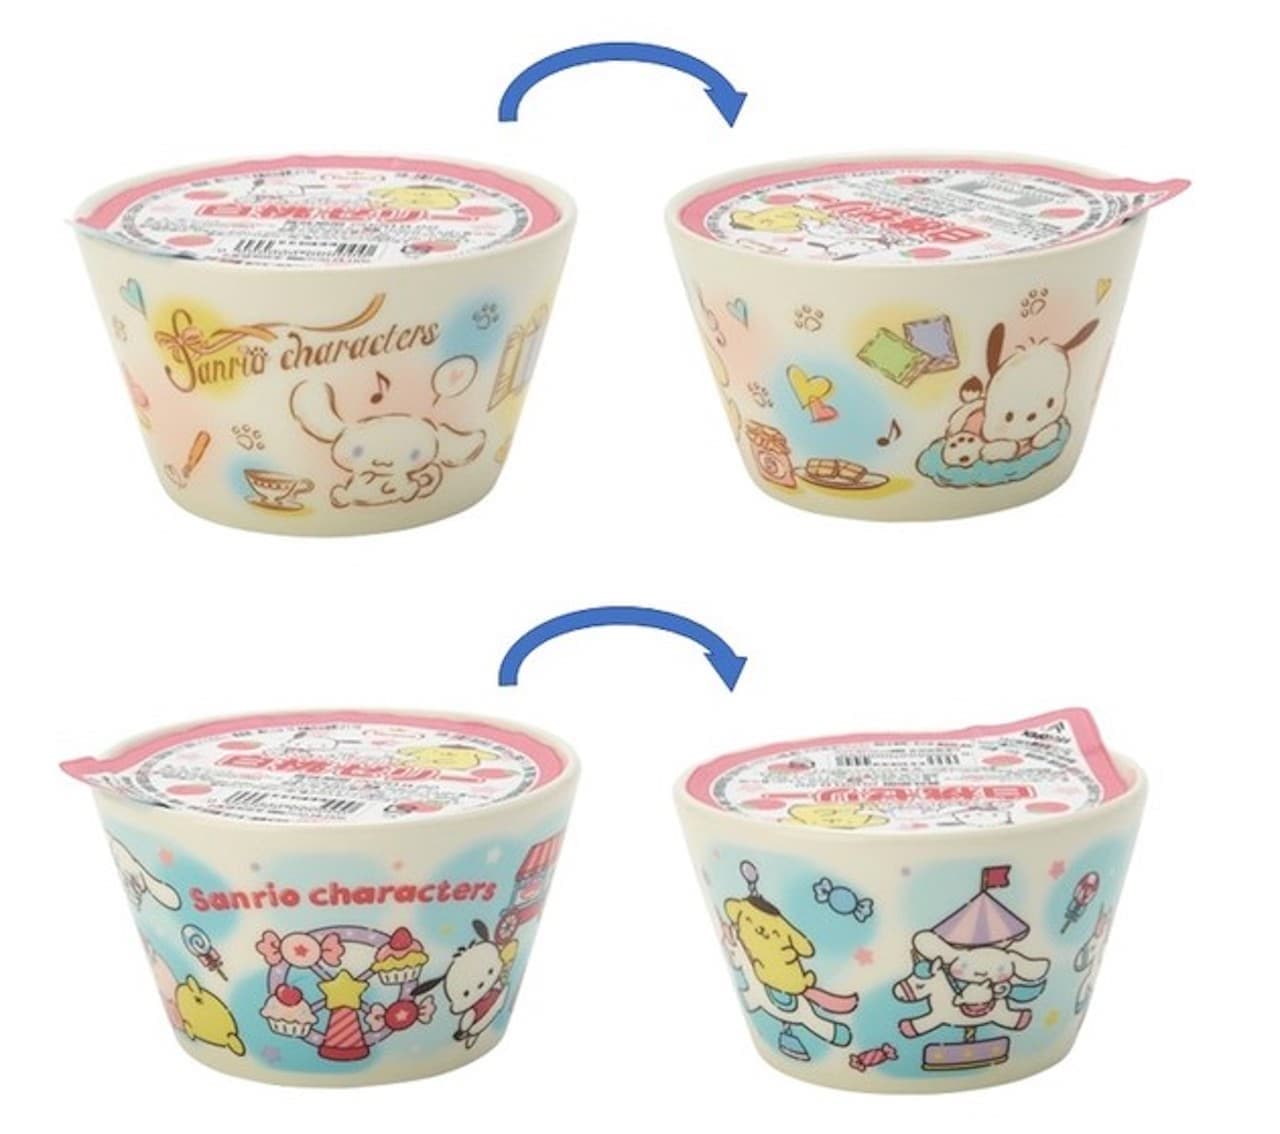 FamilyMart "Sanrio Characters Bowl & White Peach Jelly"